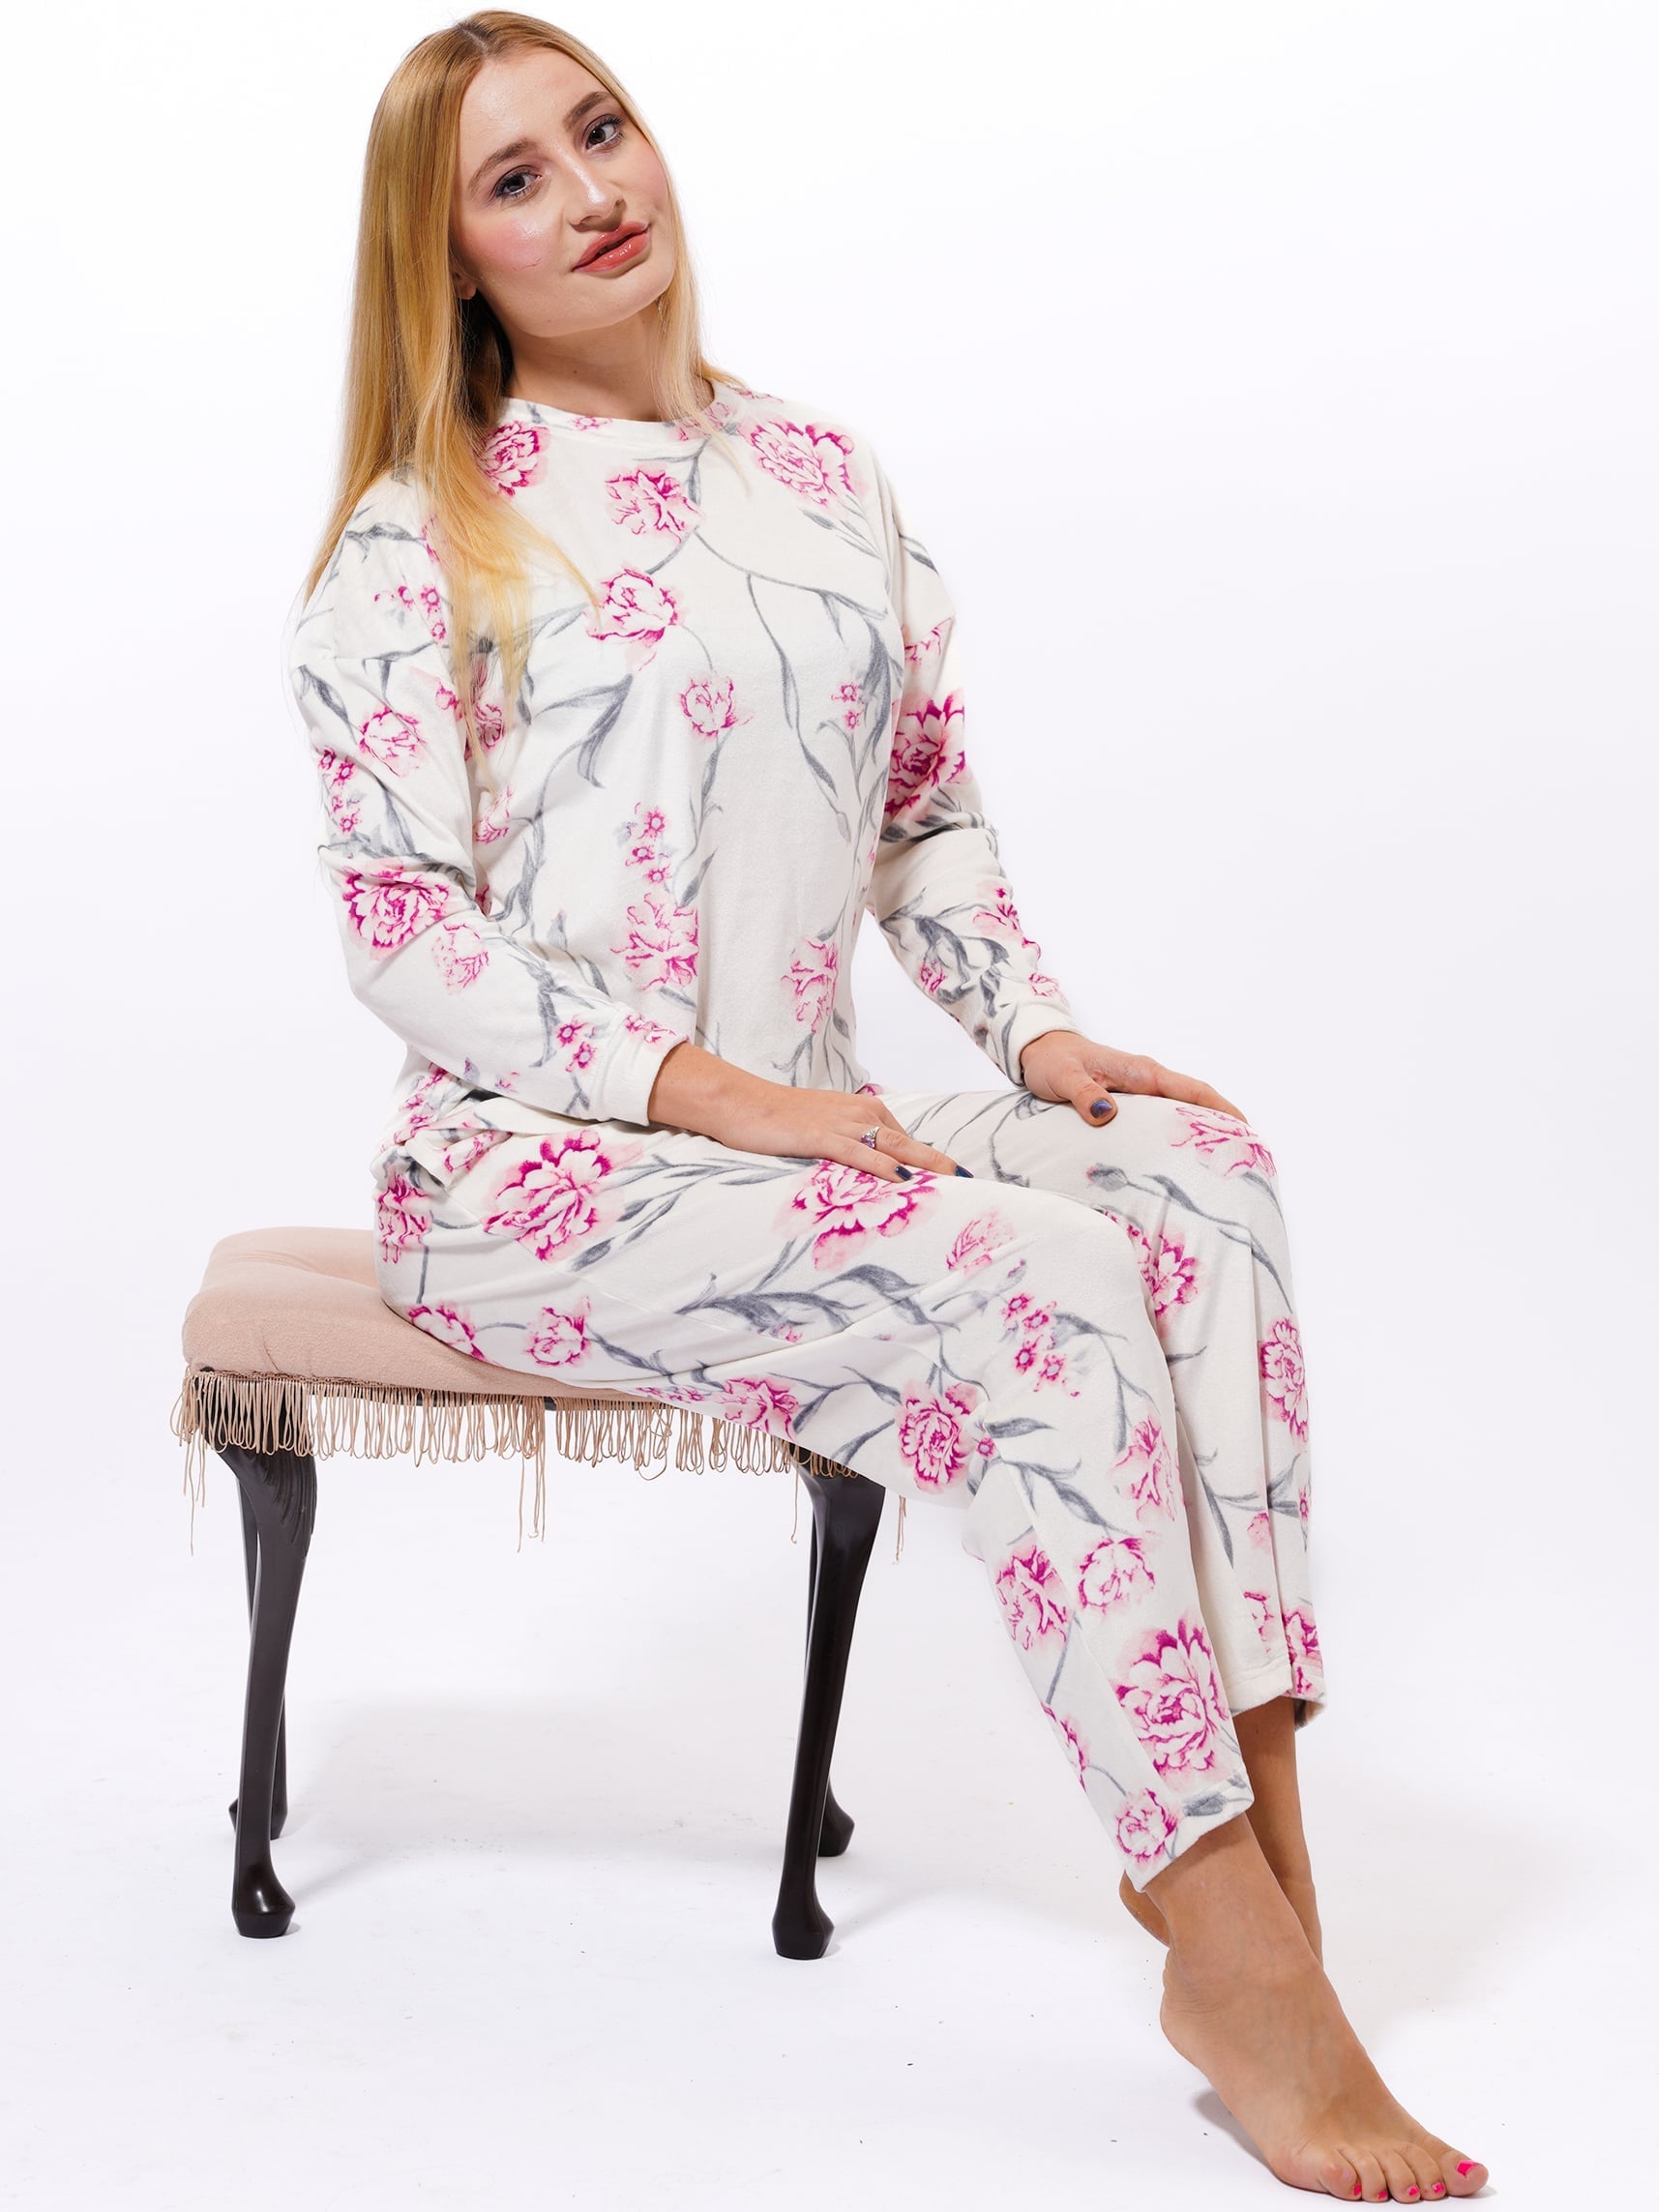 Floral Print Pajamas - Women's Sleepwear Set | CozyPJs - inteblu